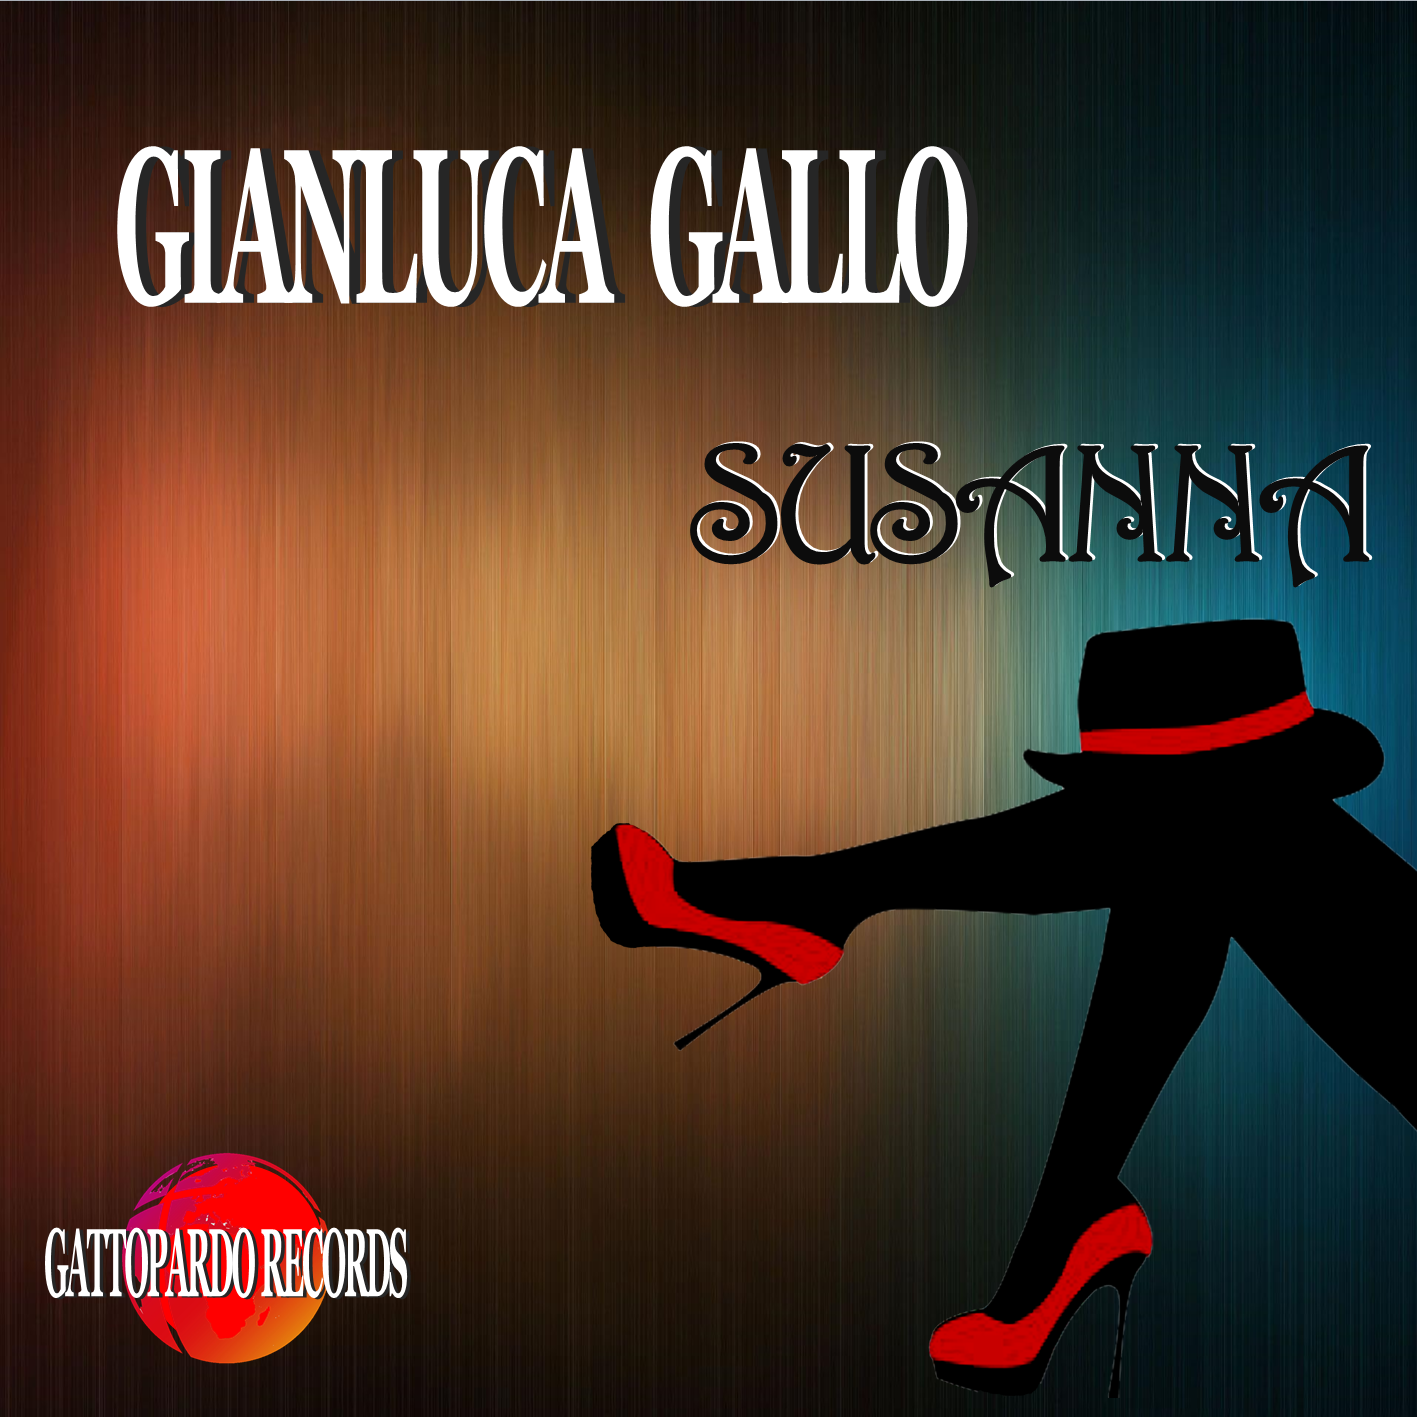 GIANLUCA GALLO RELEASES CATCHY EURO POP TUNE ‘SUSANNA’